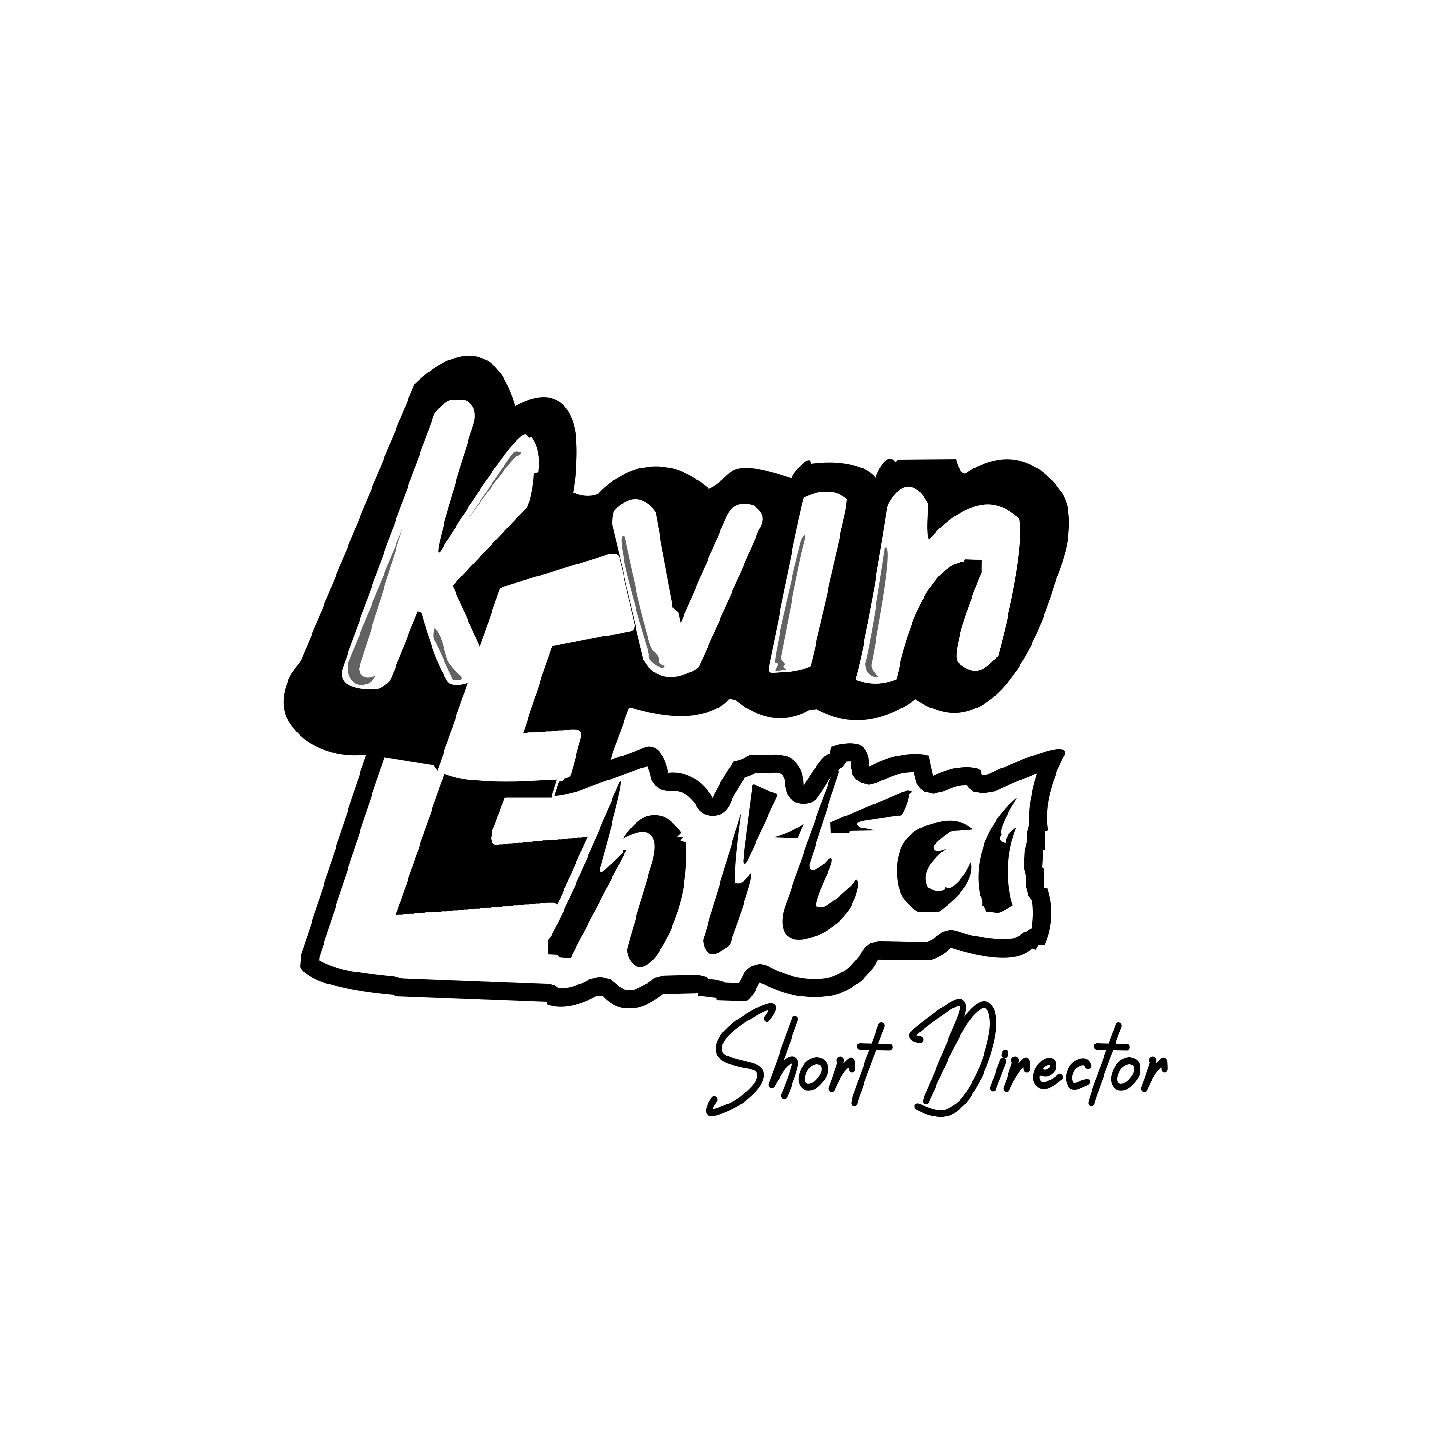 Kevin Enita's images